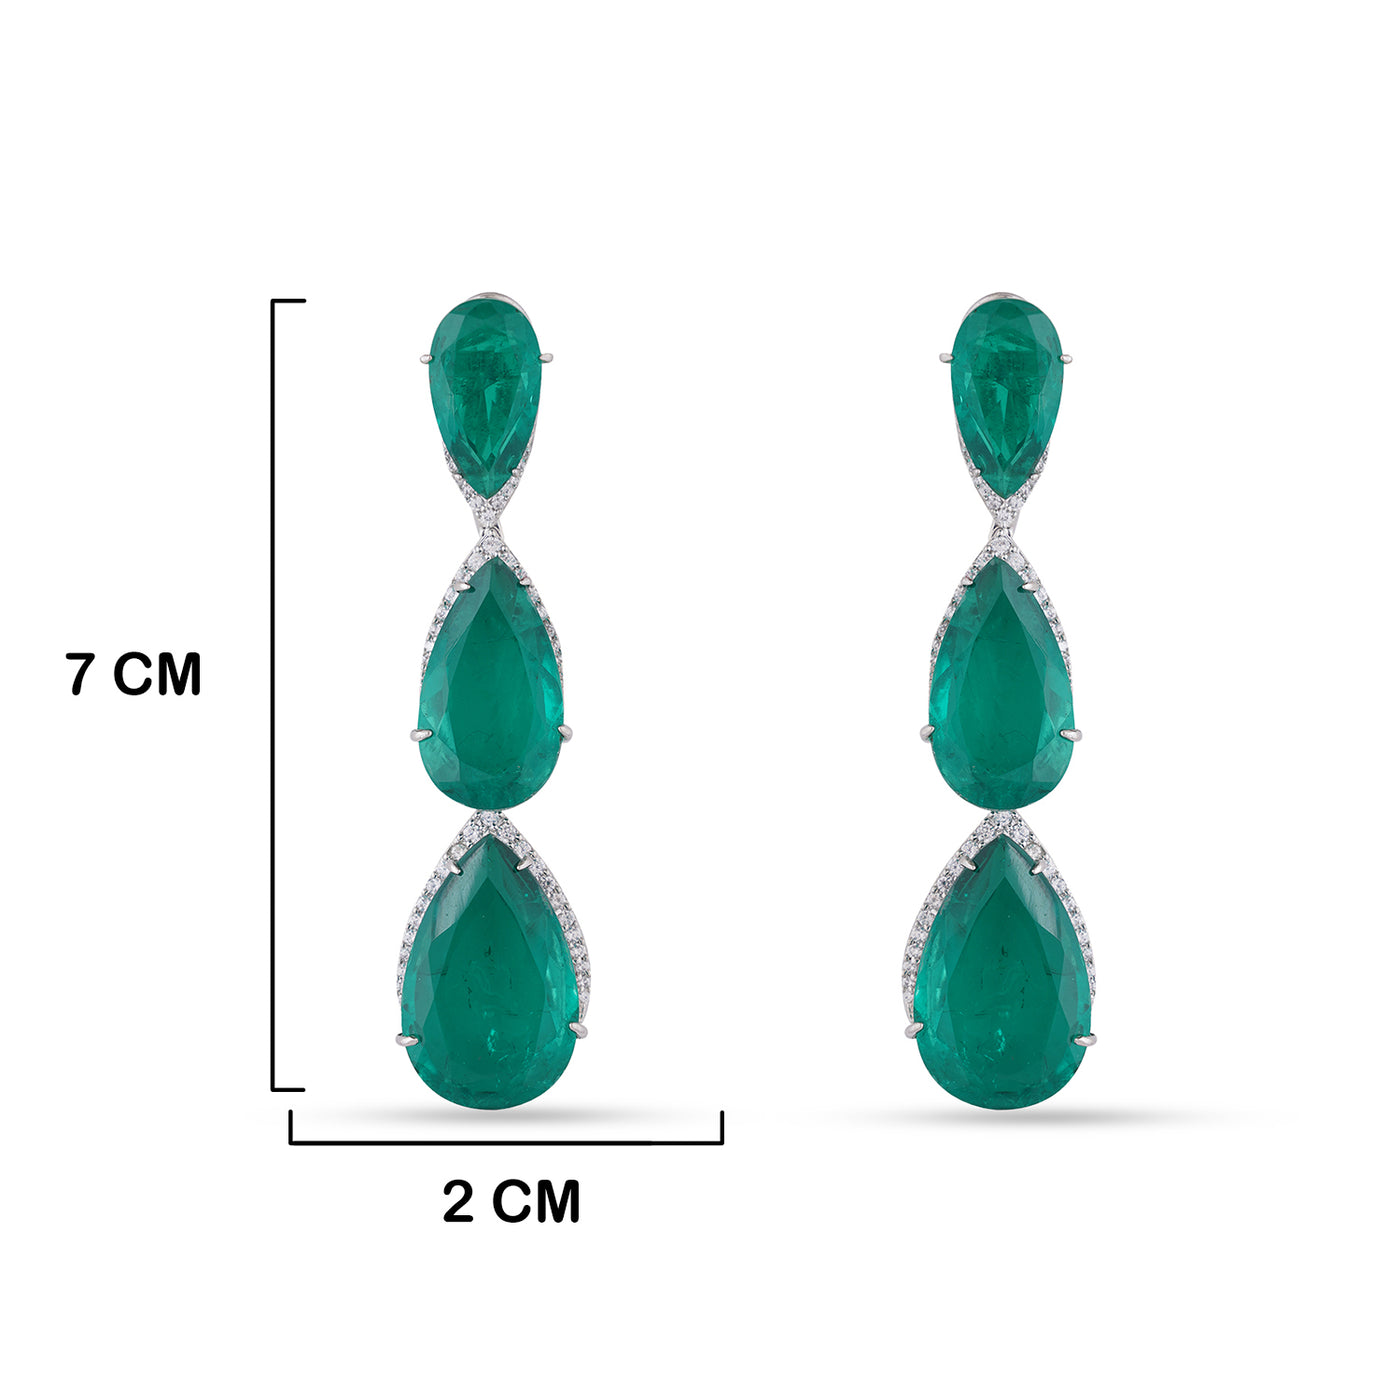 Green Drop CZ Dangle Earrings with measurements in cm. 7cm by 2cm.